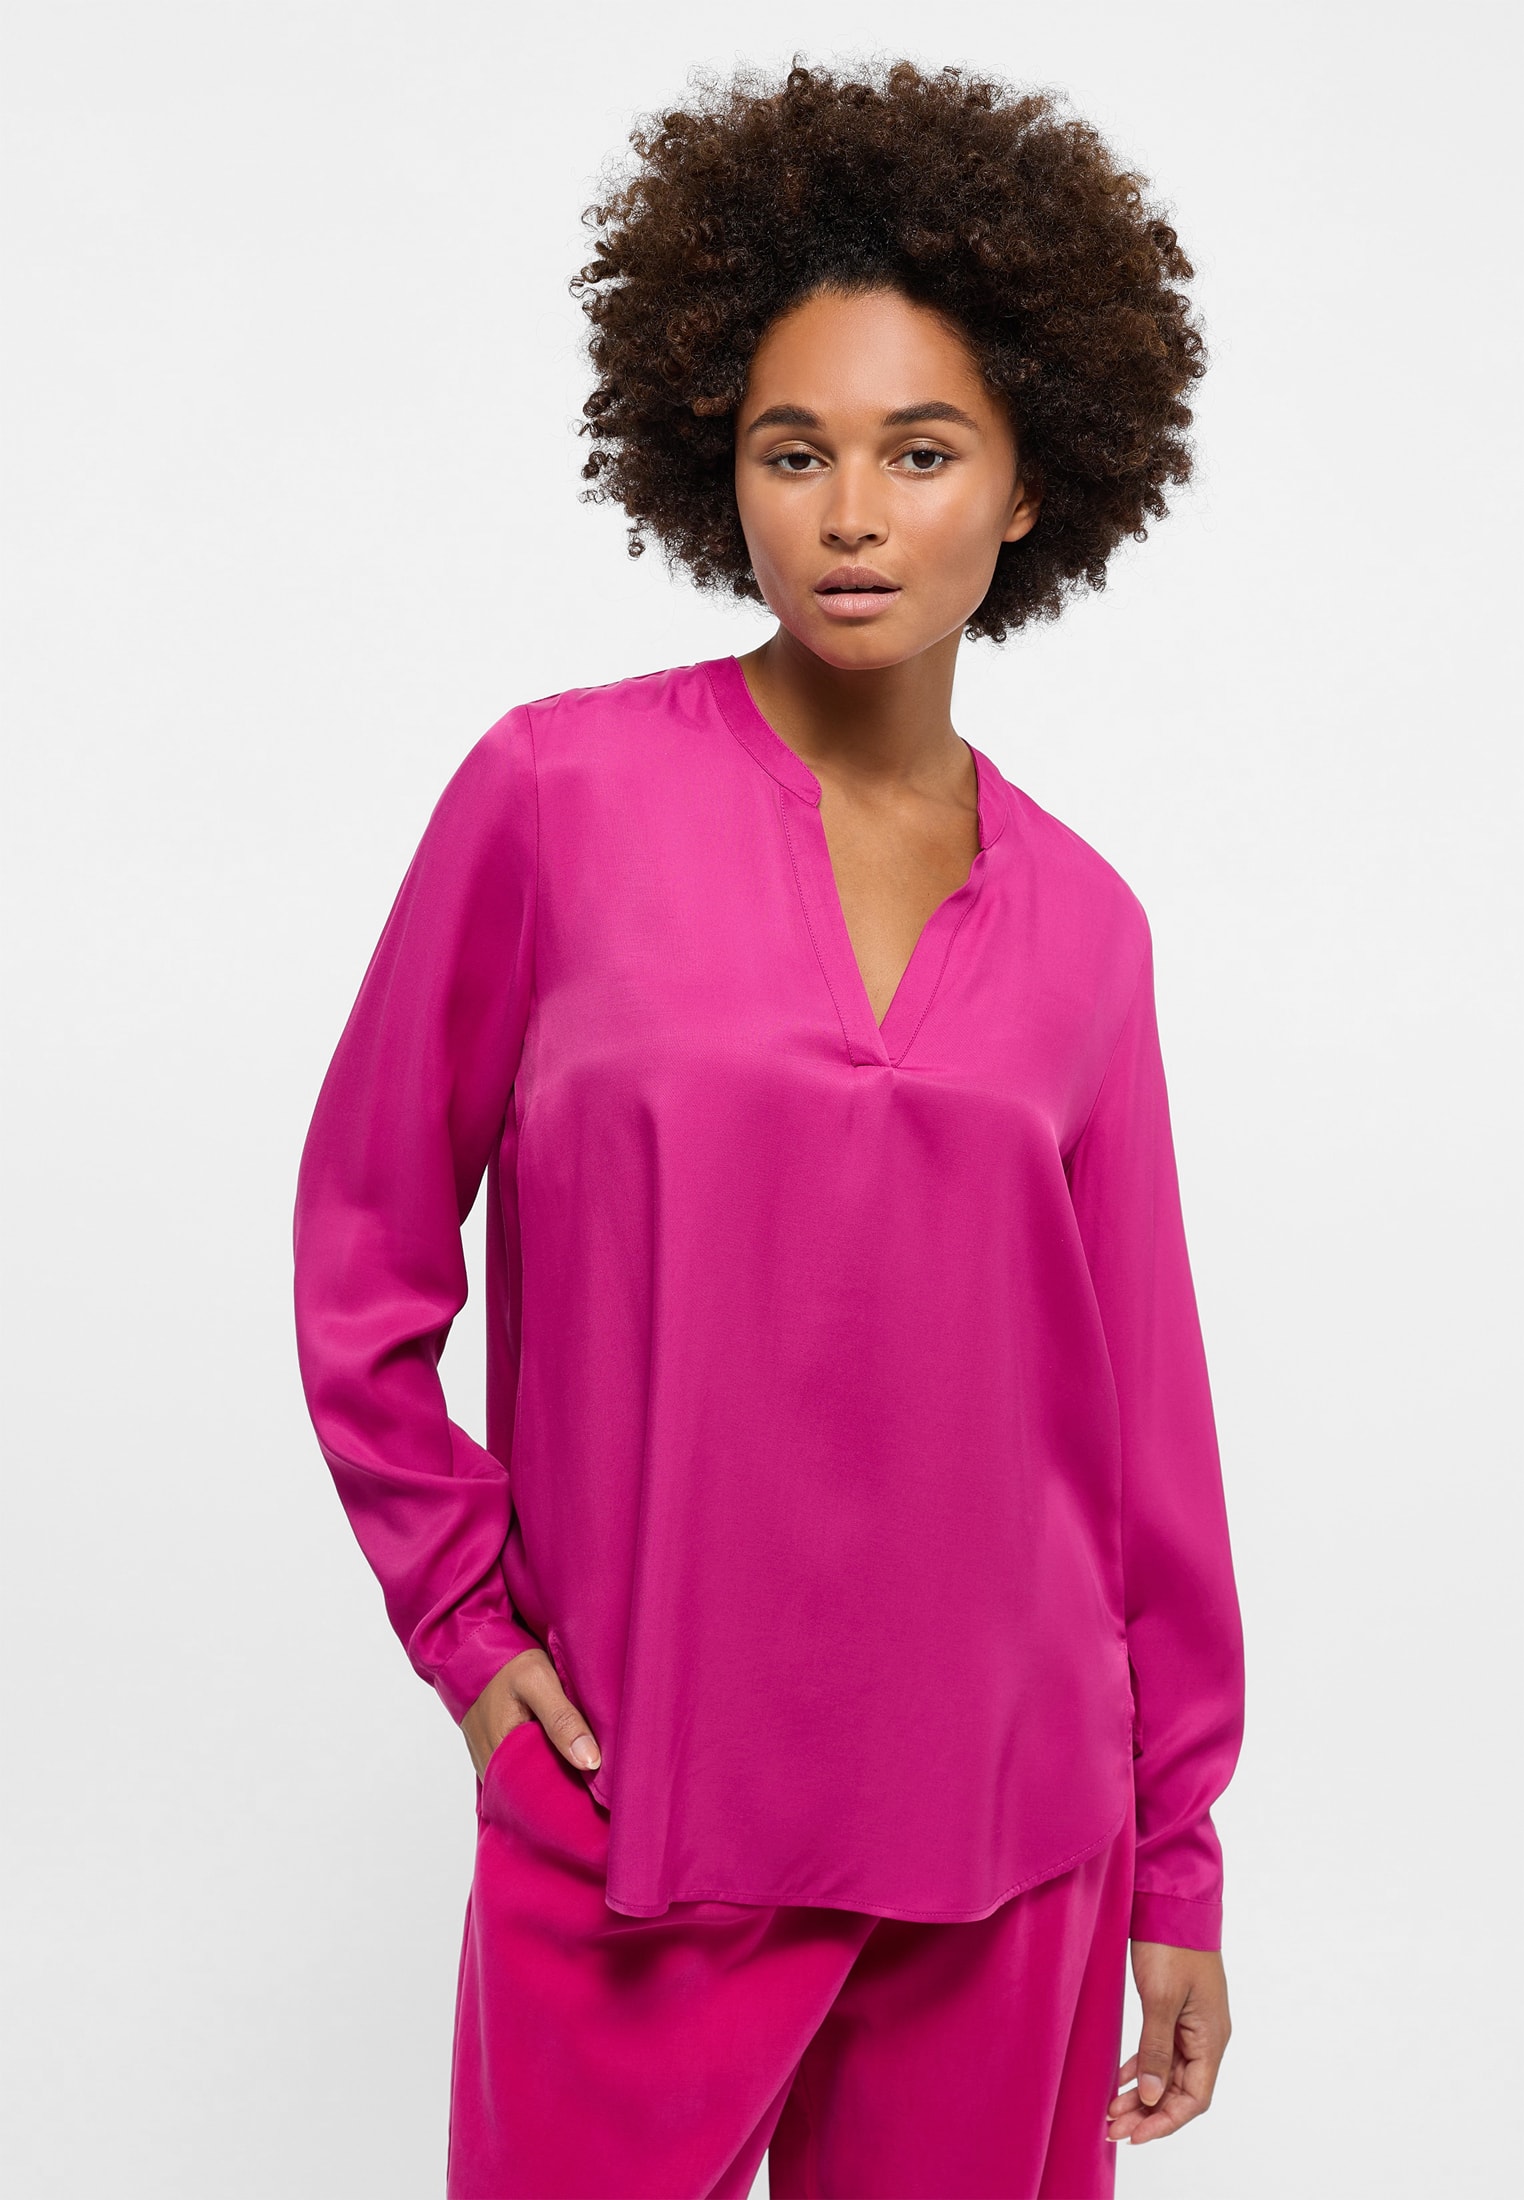 Viscose Shirt Bluse in pink | unifarben 2BL00329-15-31-38-1/1 | vibrant pink Langarm 38 vibrant | 